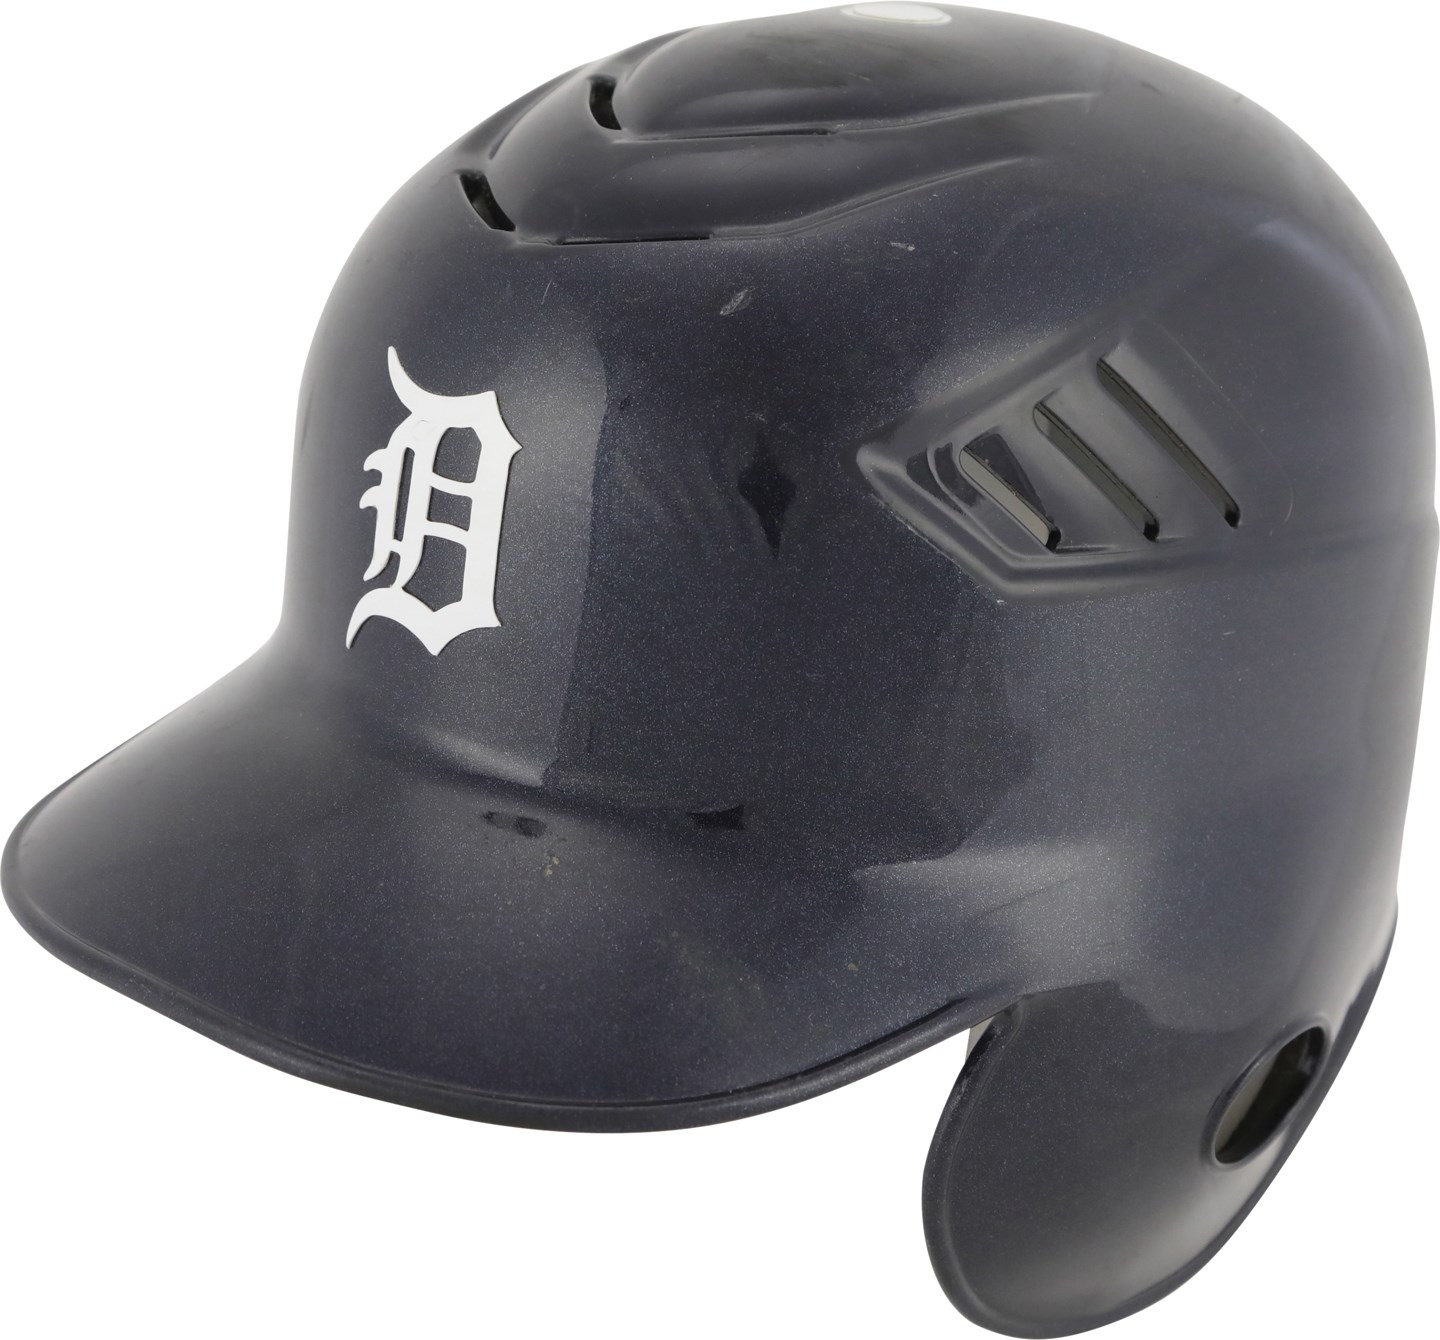 Baseball Equipment - 2007 Ivan "Pudge" Rodriquez Detroit Tigers Game Used Helmet (MLB)